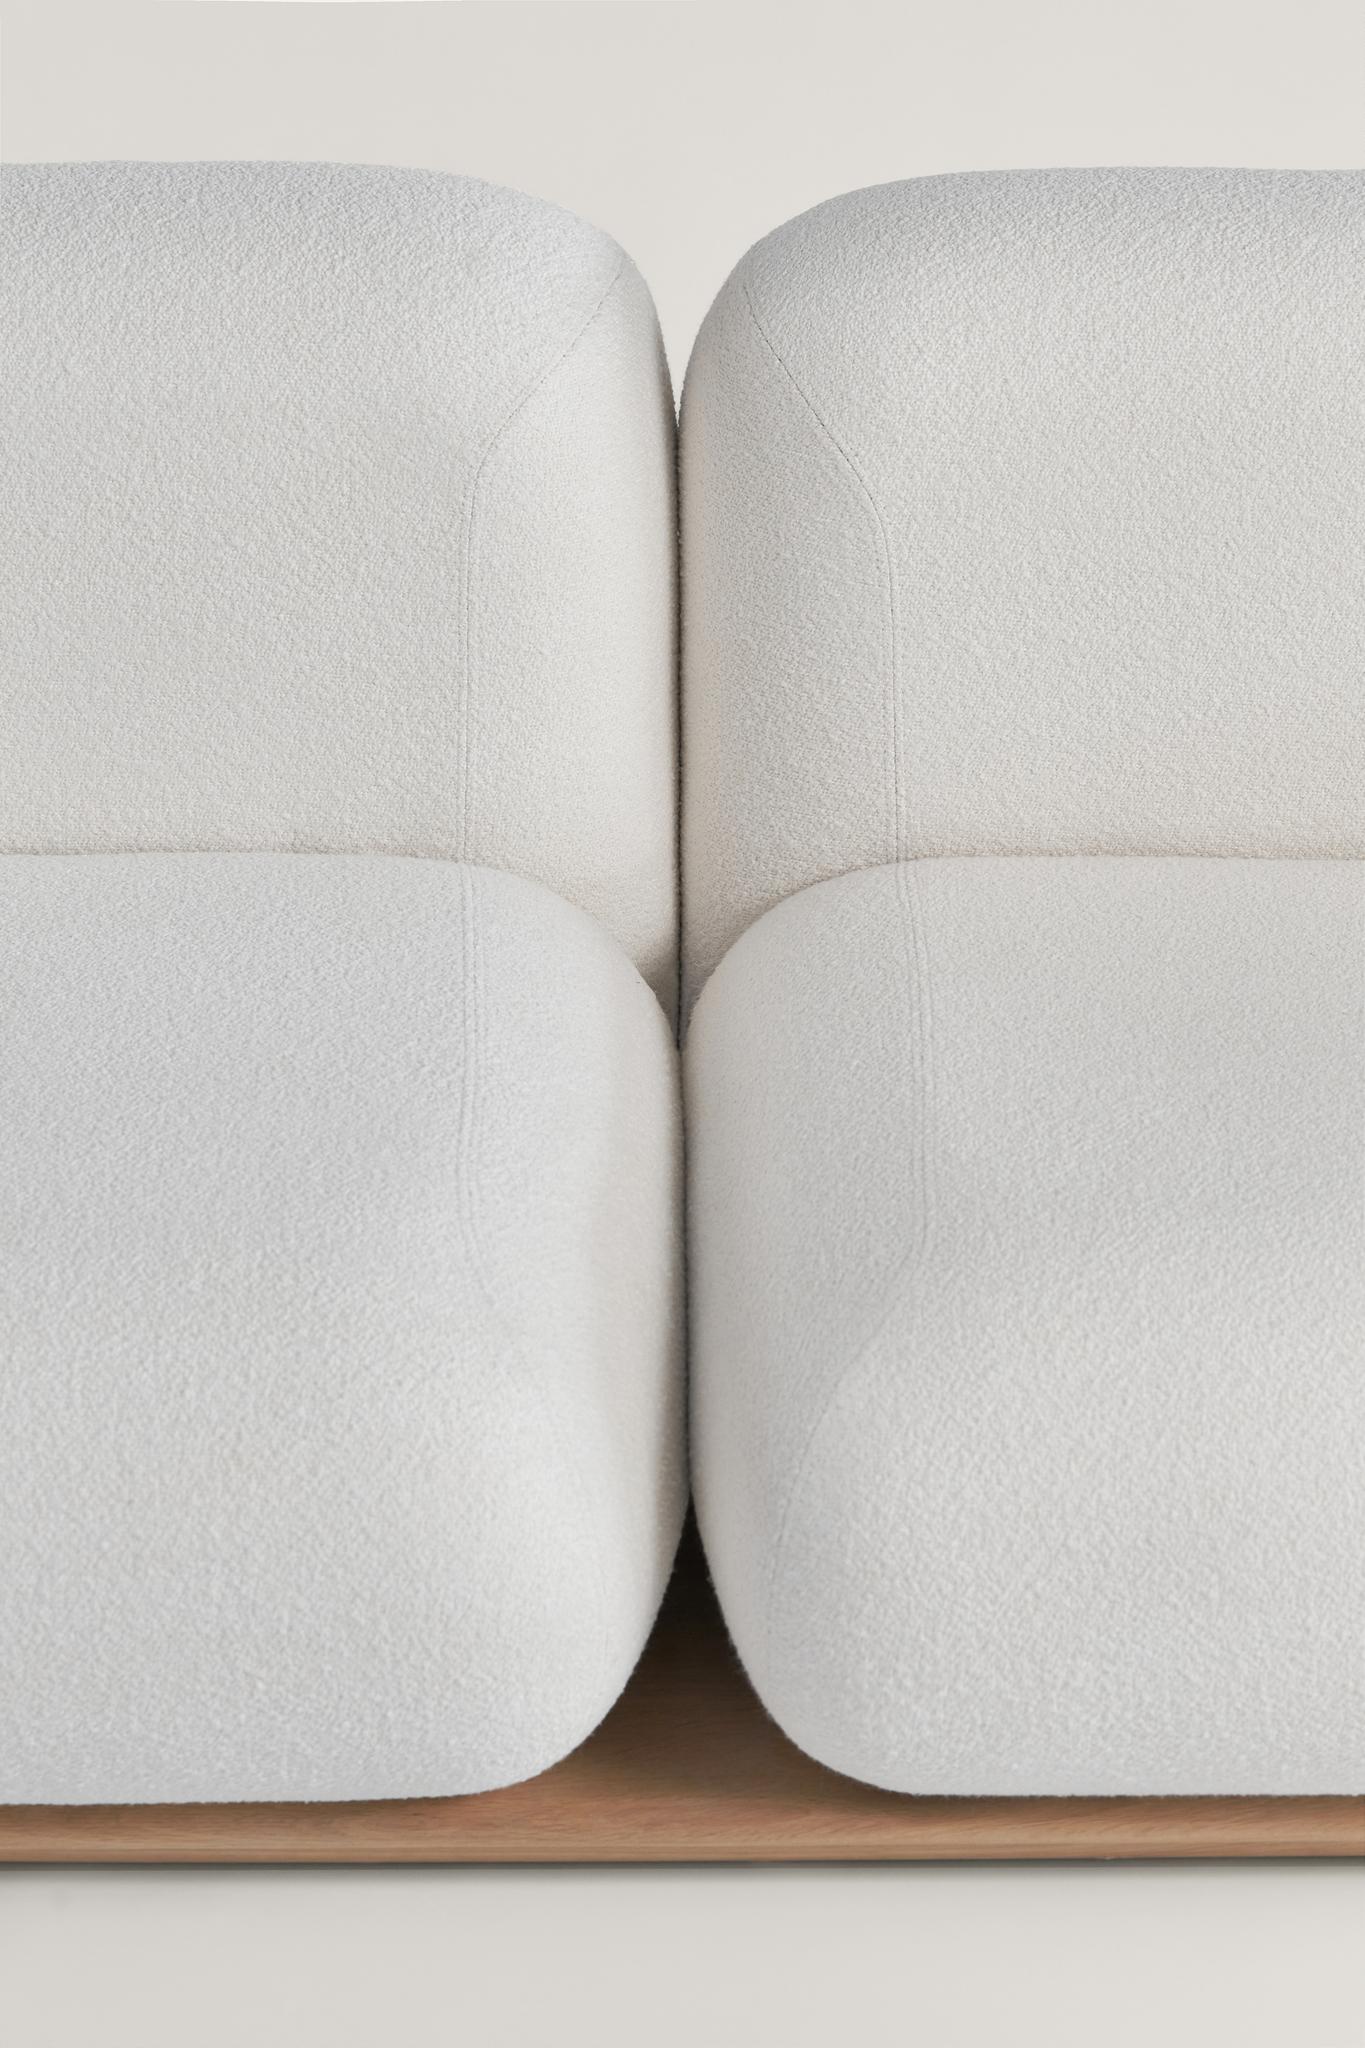 Minimalist Cannoli Sofa by Studio Phat x Arbore 'Bent Hardwood Structure' For Sale